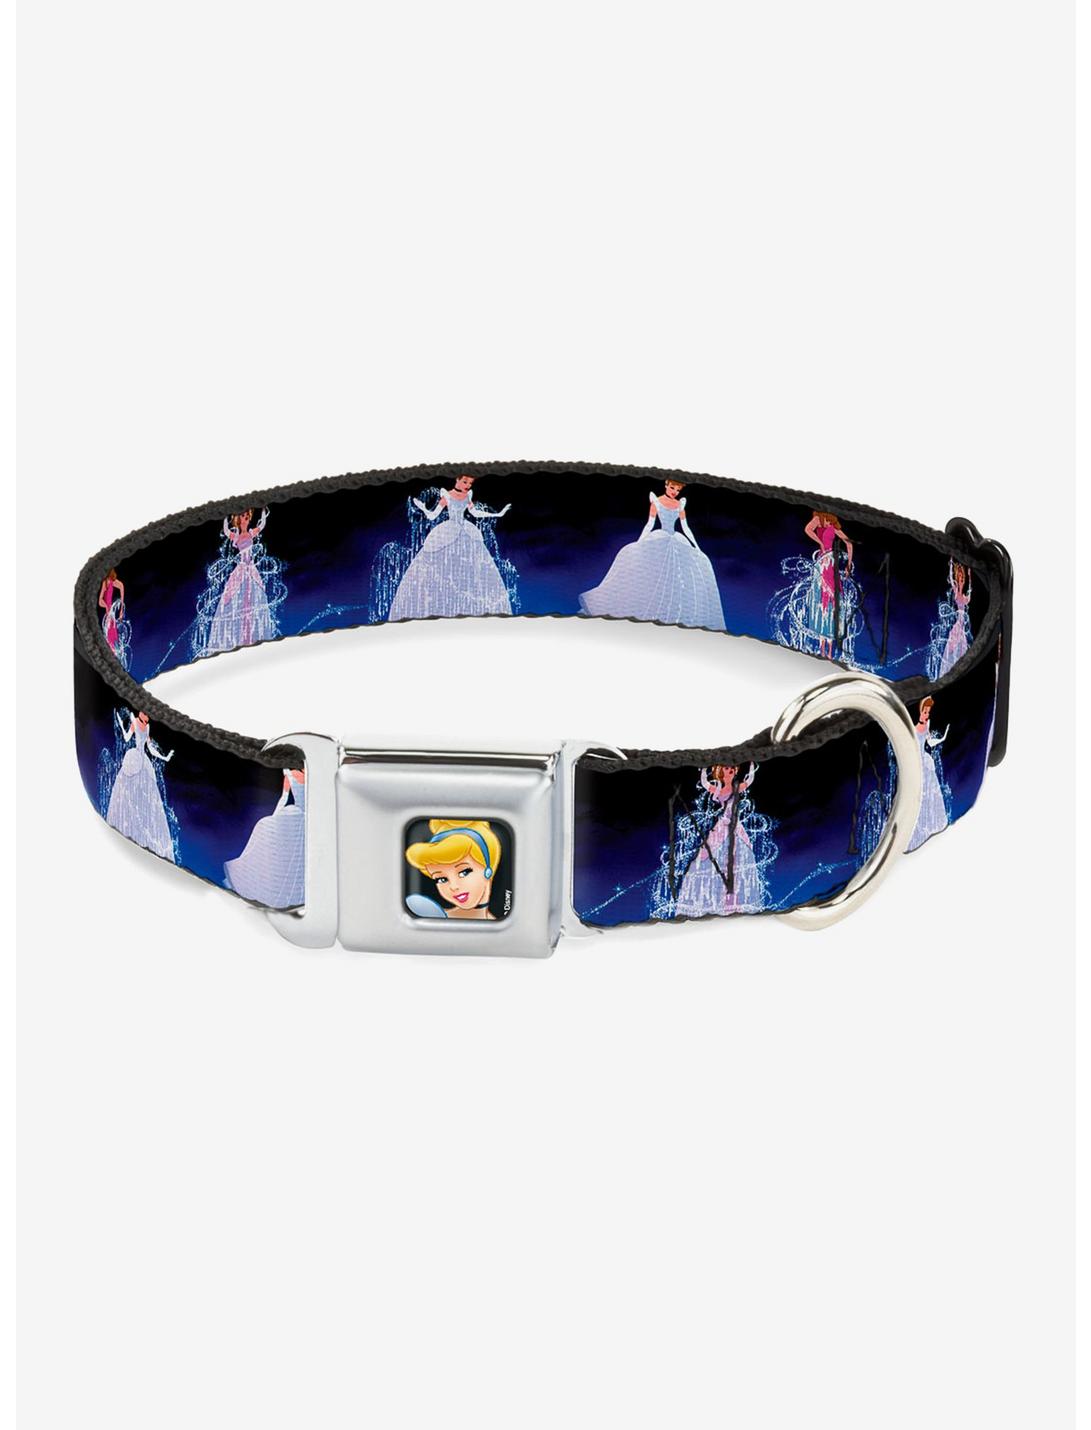 Disney Princess Cinderella Transformation Seatbelt Buckle Dog Collar, BLUE, hi-res